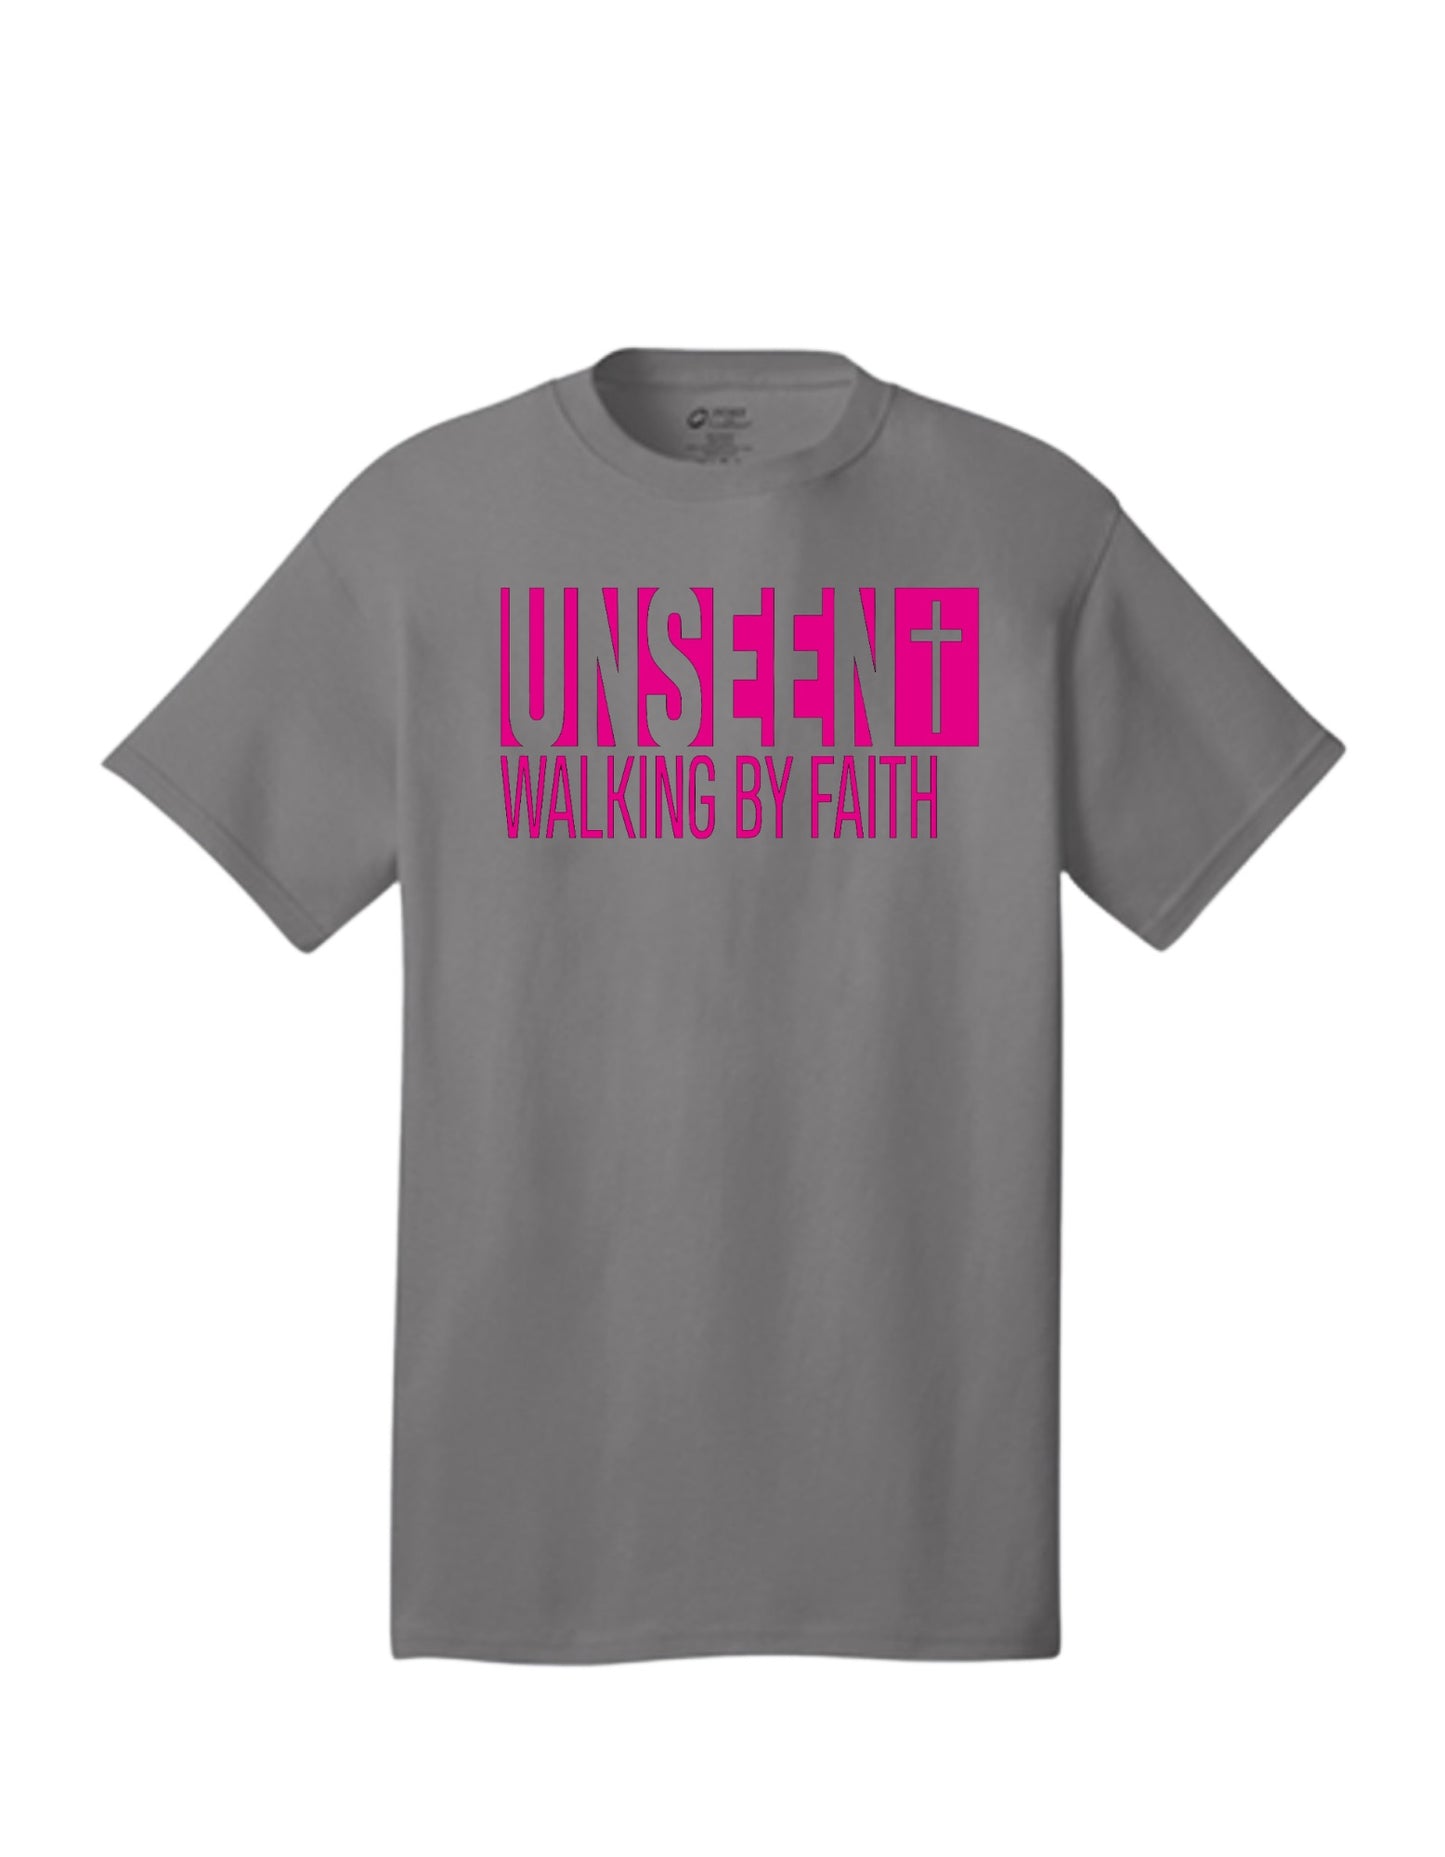 UWBF t-shirt with Cross